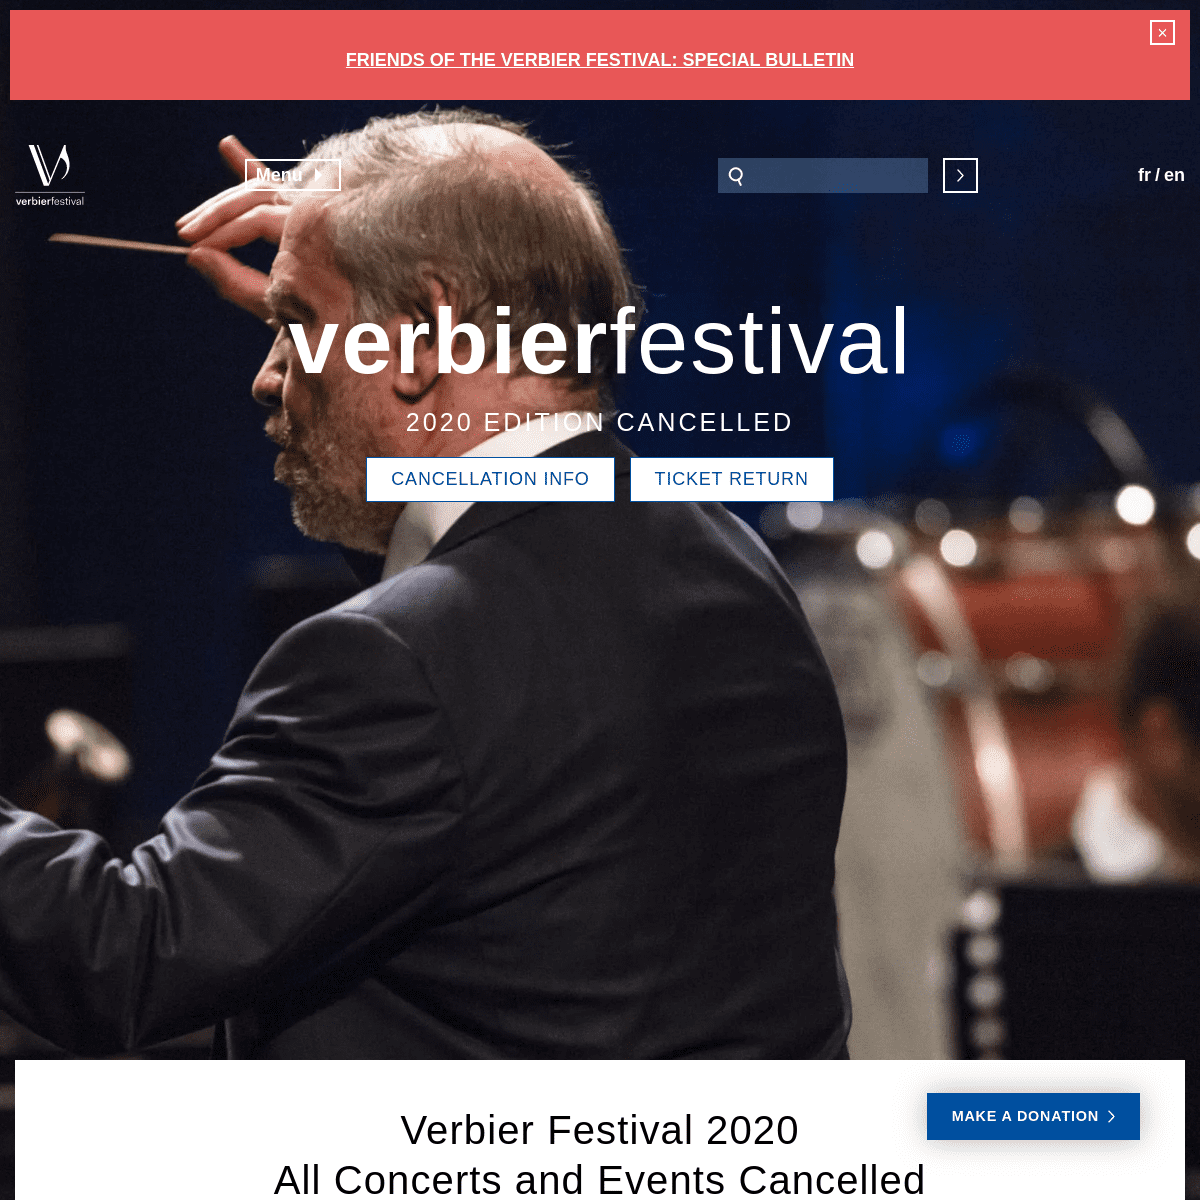 A complete backup of verbierfestival.com